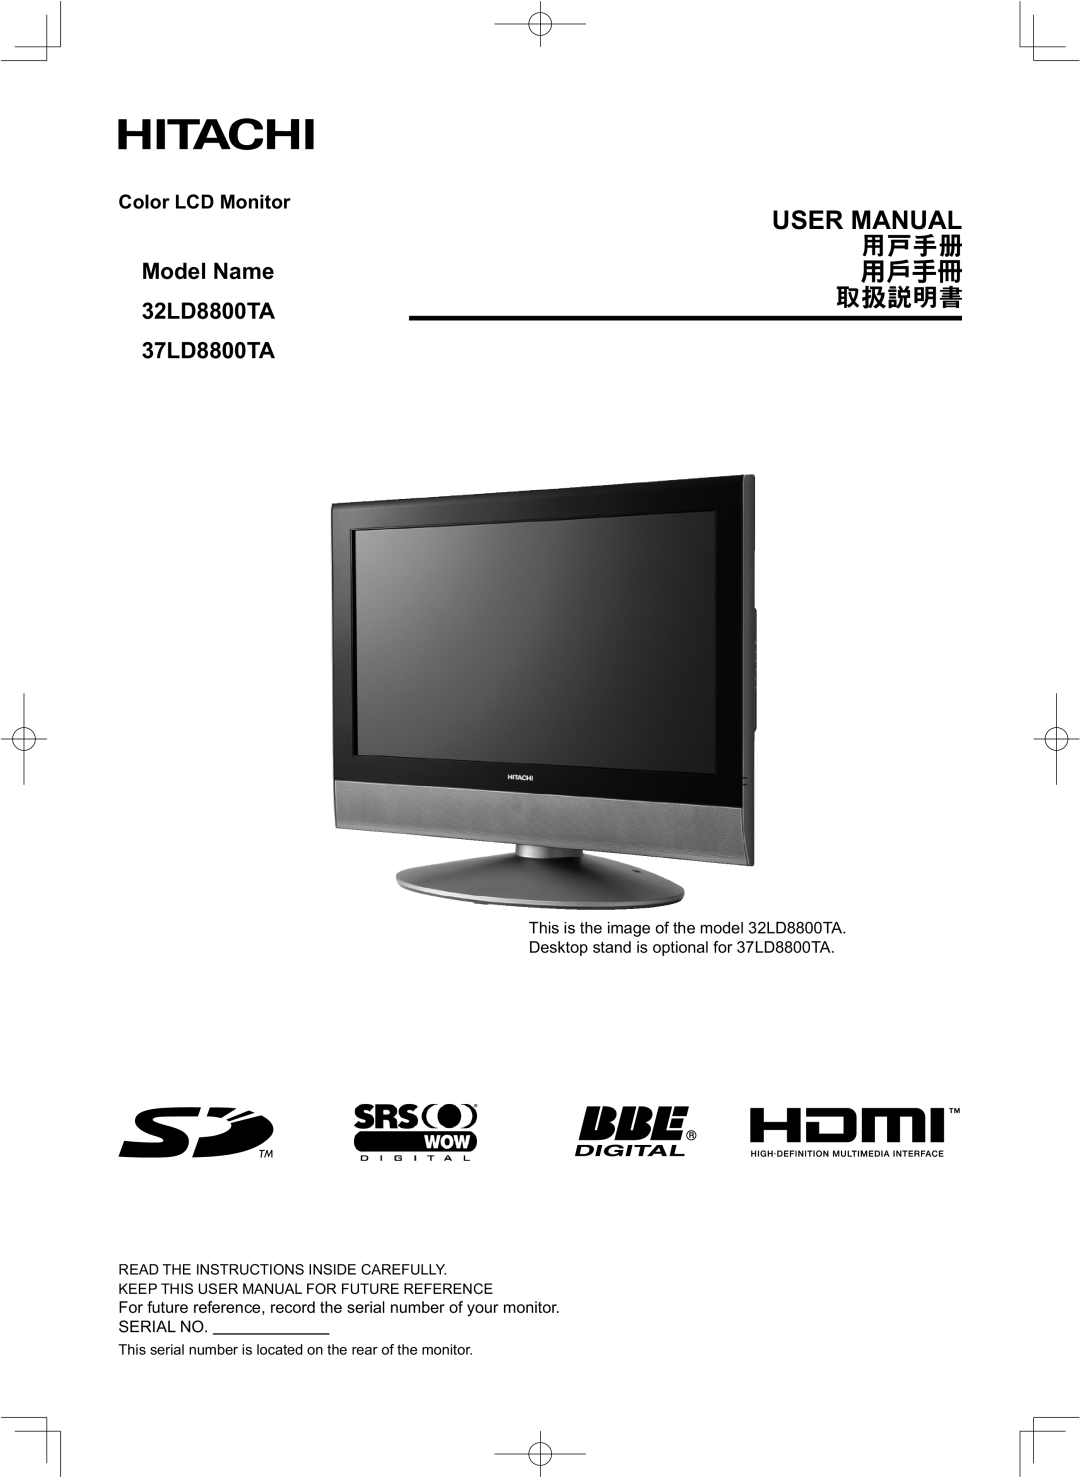 Hitachi user manual Model Name 32LD8800TA 37LD8800TA, Color LCD Monitor, User Manual 